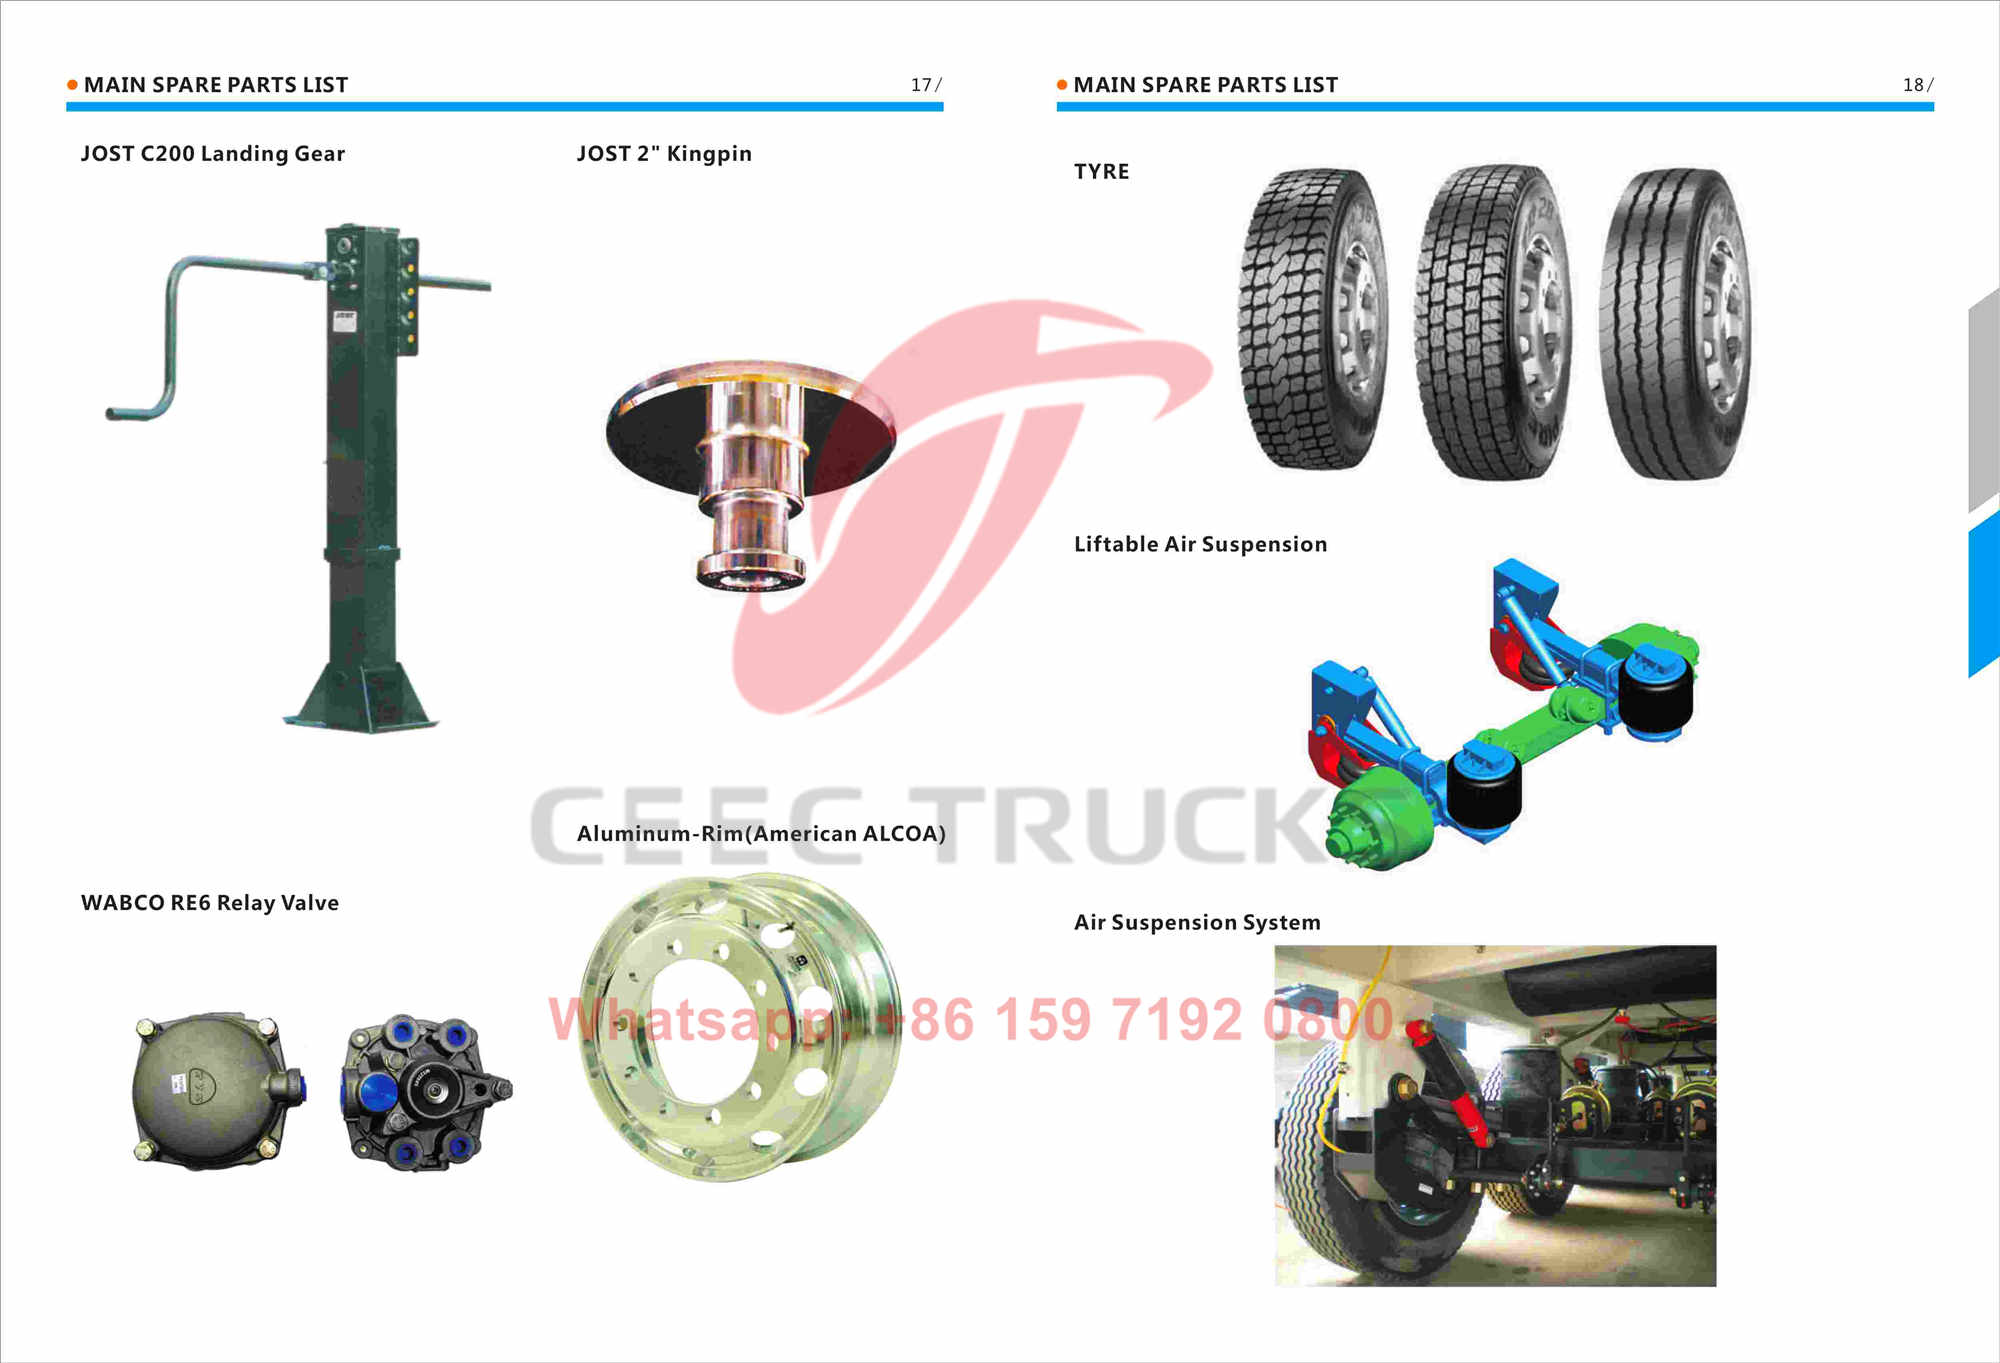 CEEC semitrailer catalogue